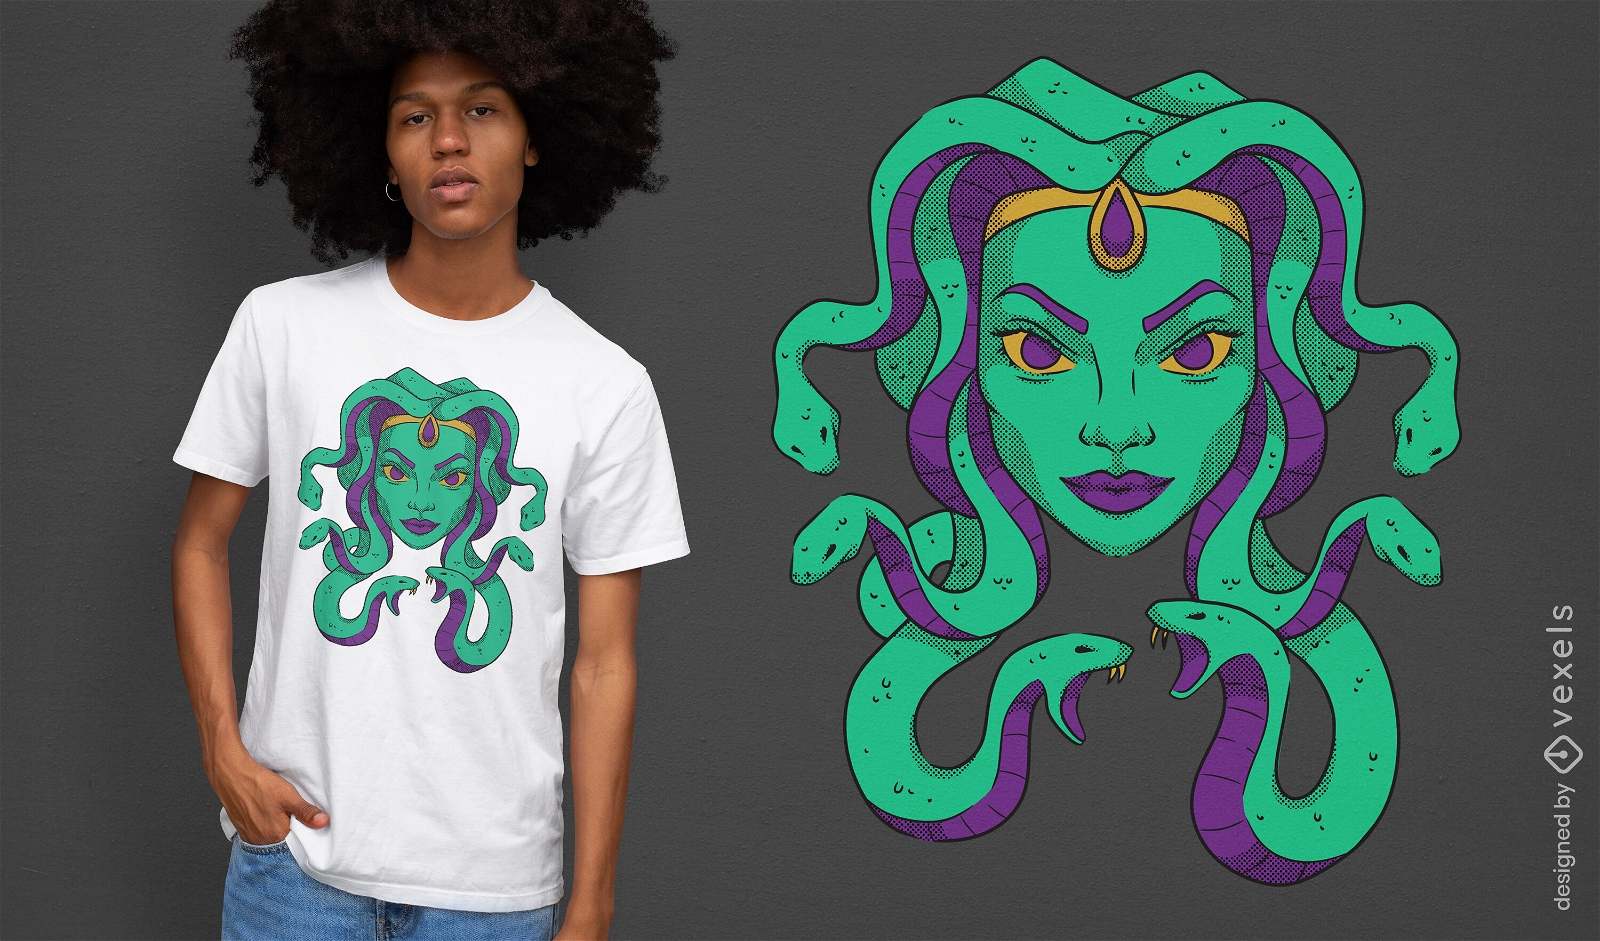 Dise?o de camiseta de la mitolog?a griega Medusa